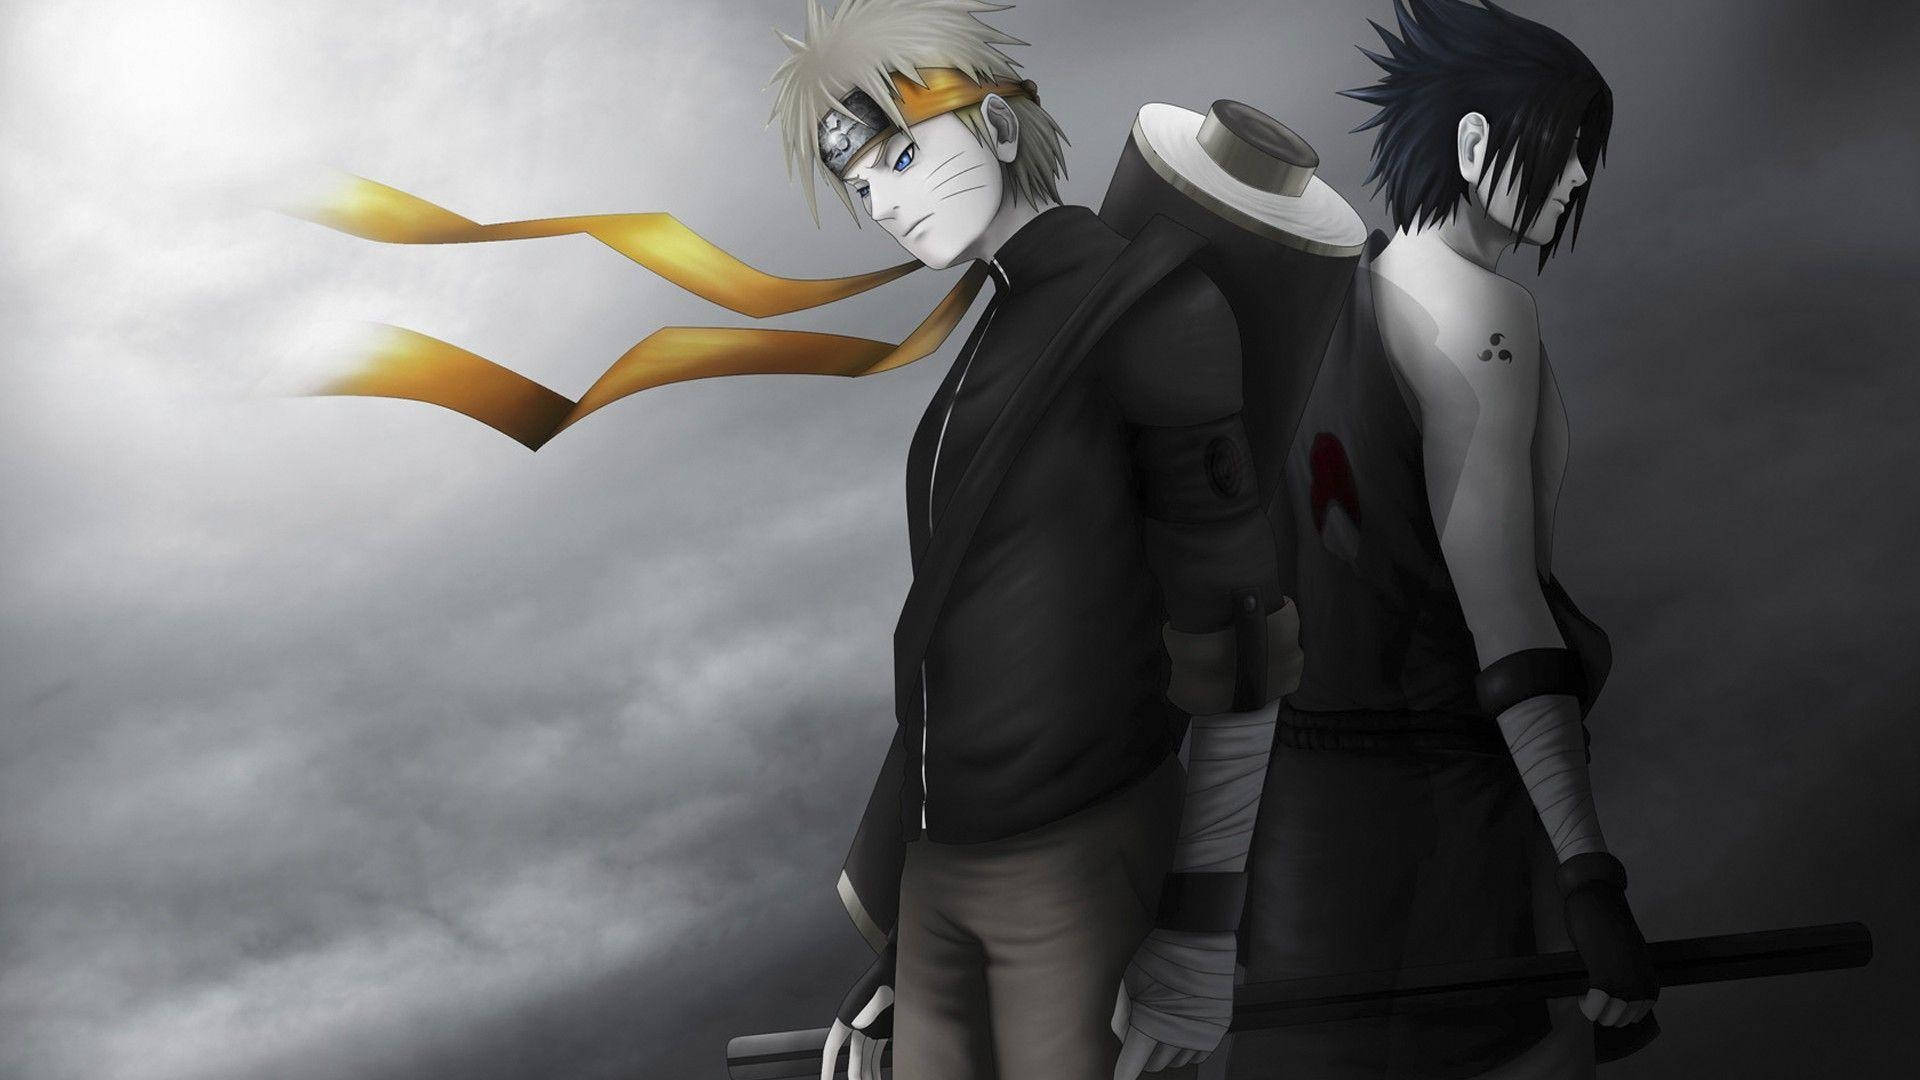 Impresionanteanime De Naruto Y Sasuke En Blanco Y Negro. Fondo de pantalla